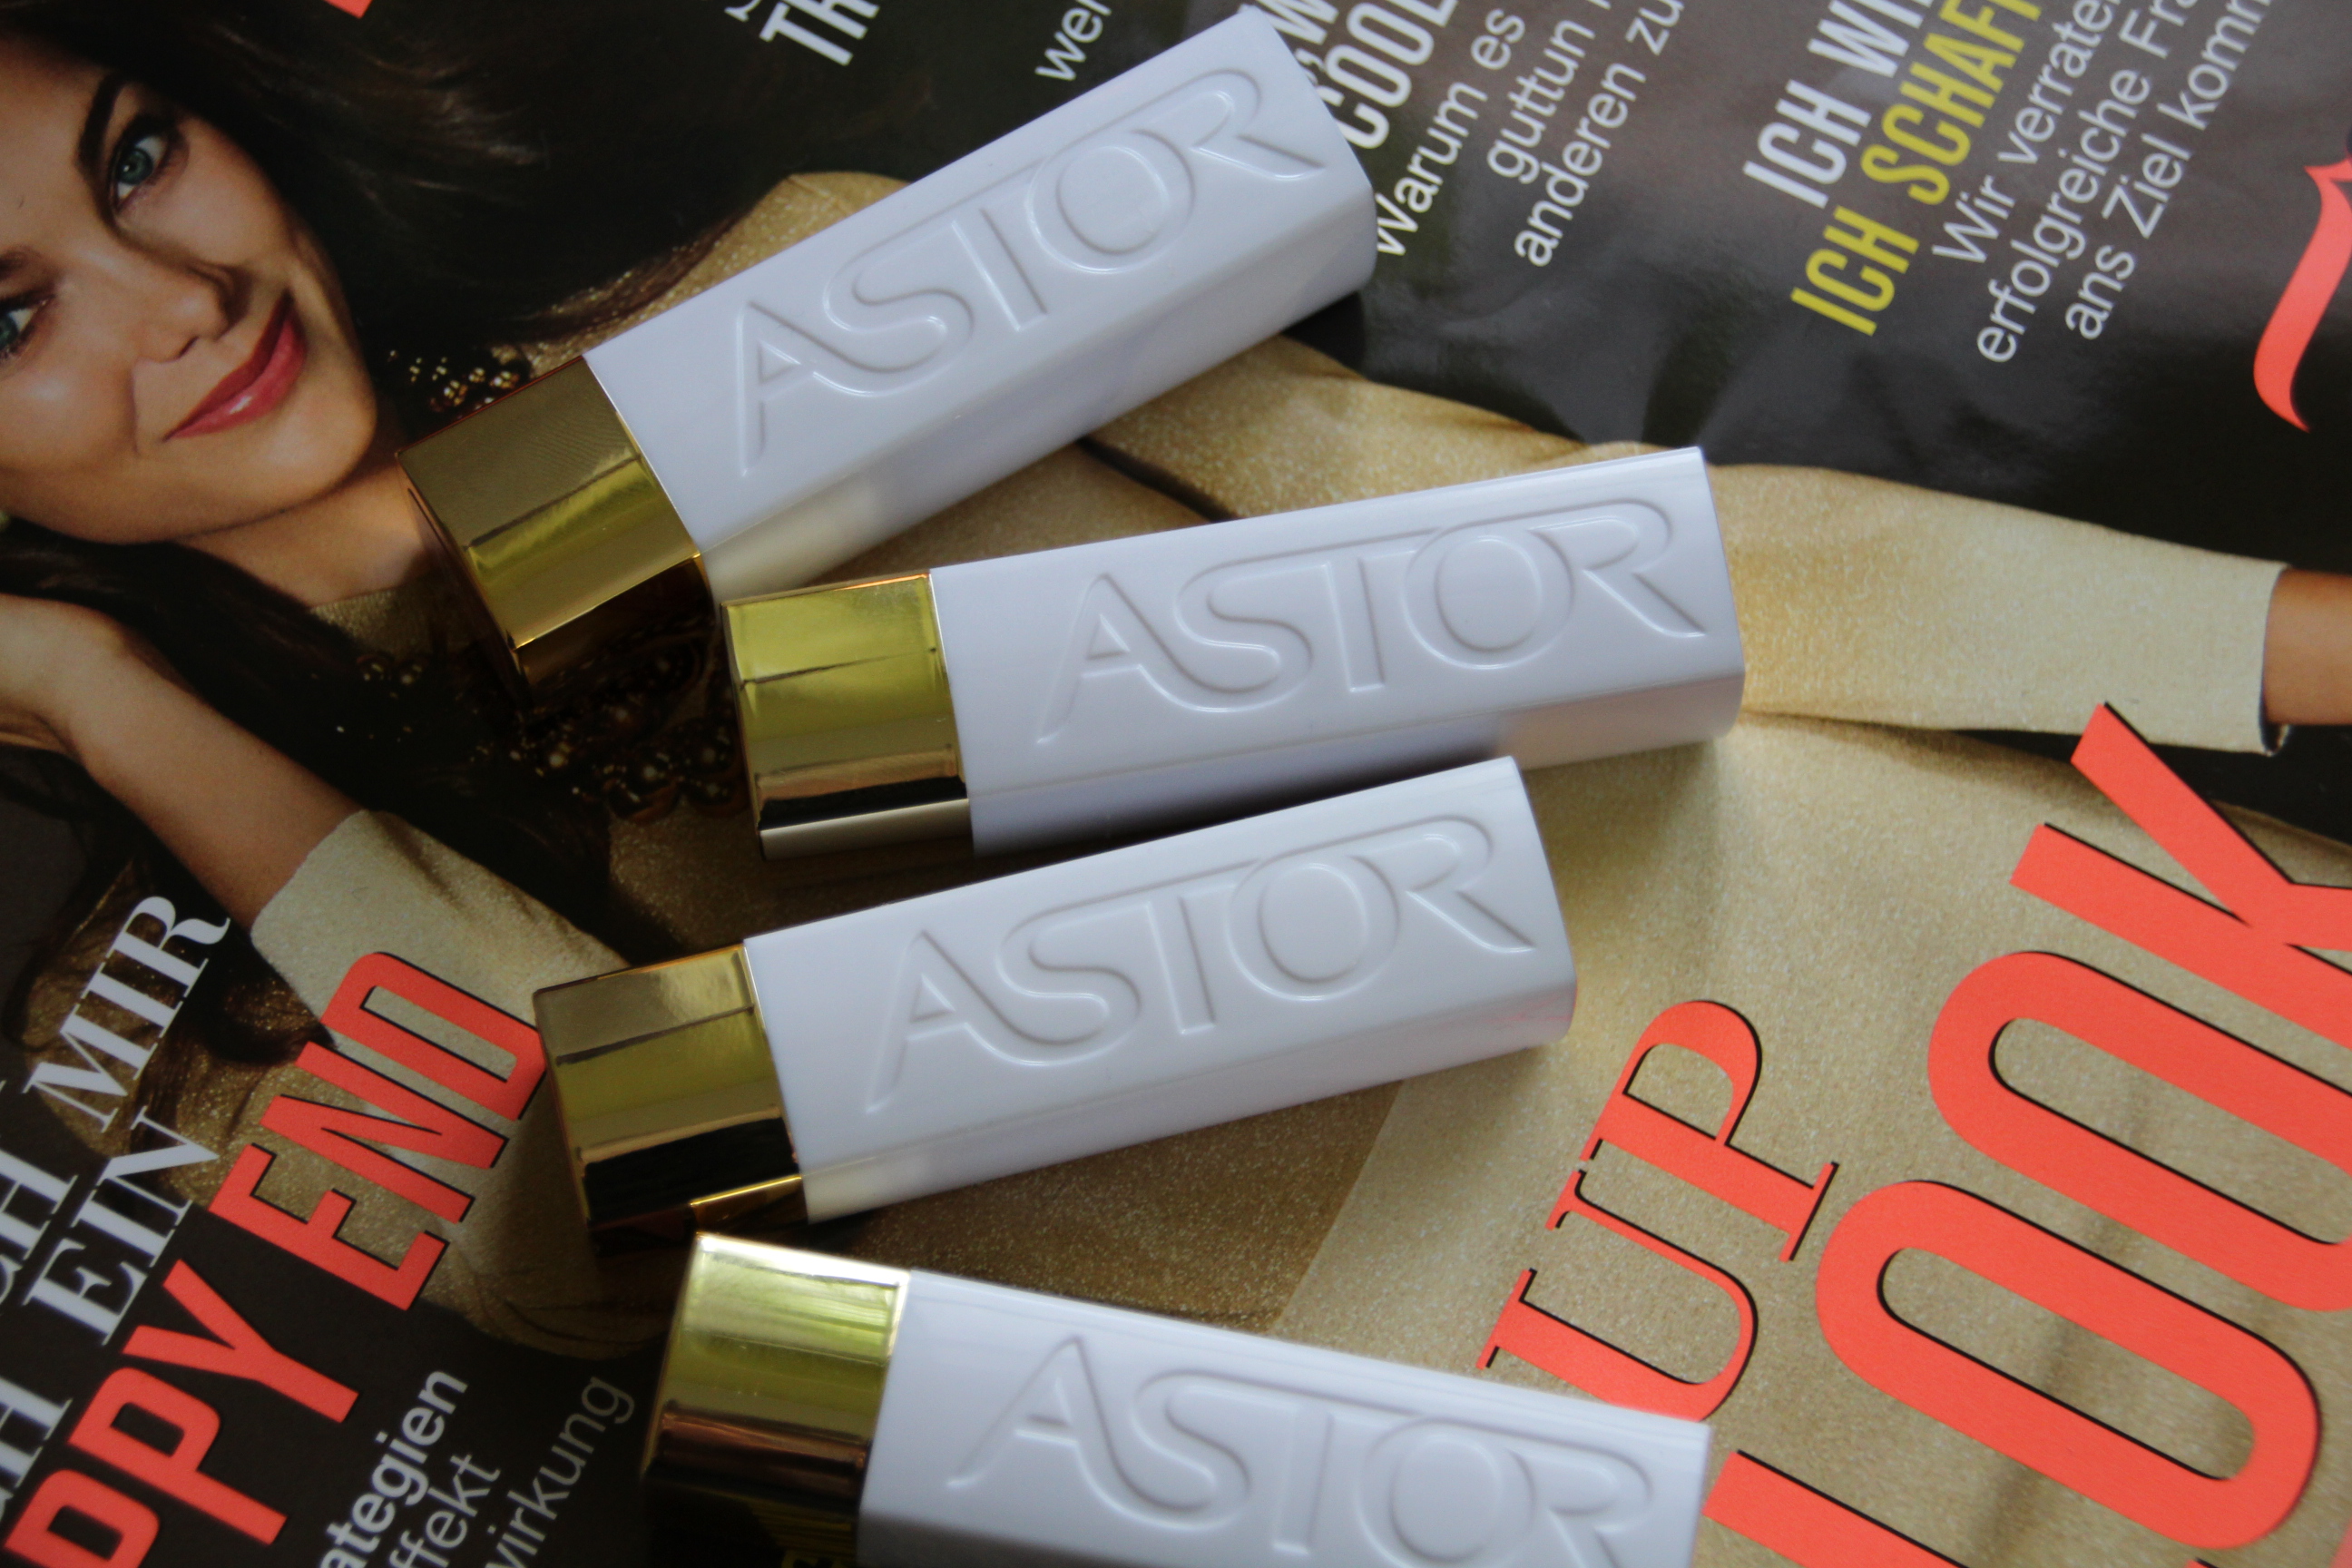 Astor_Lipsticks